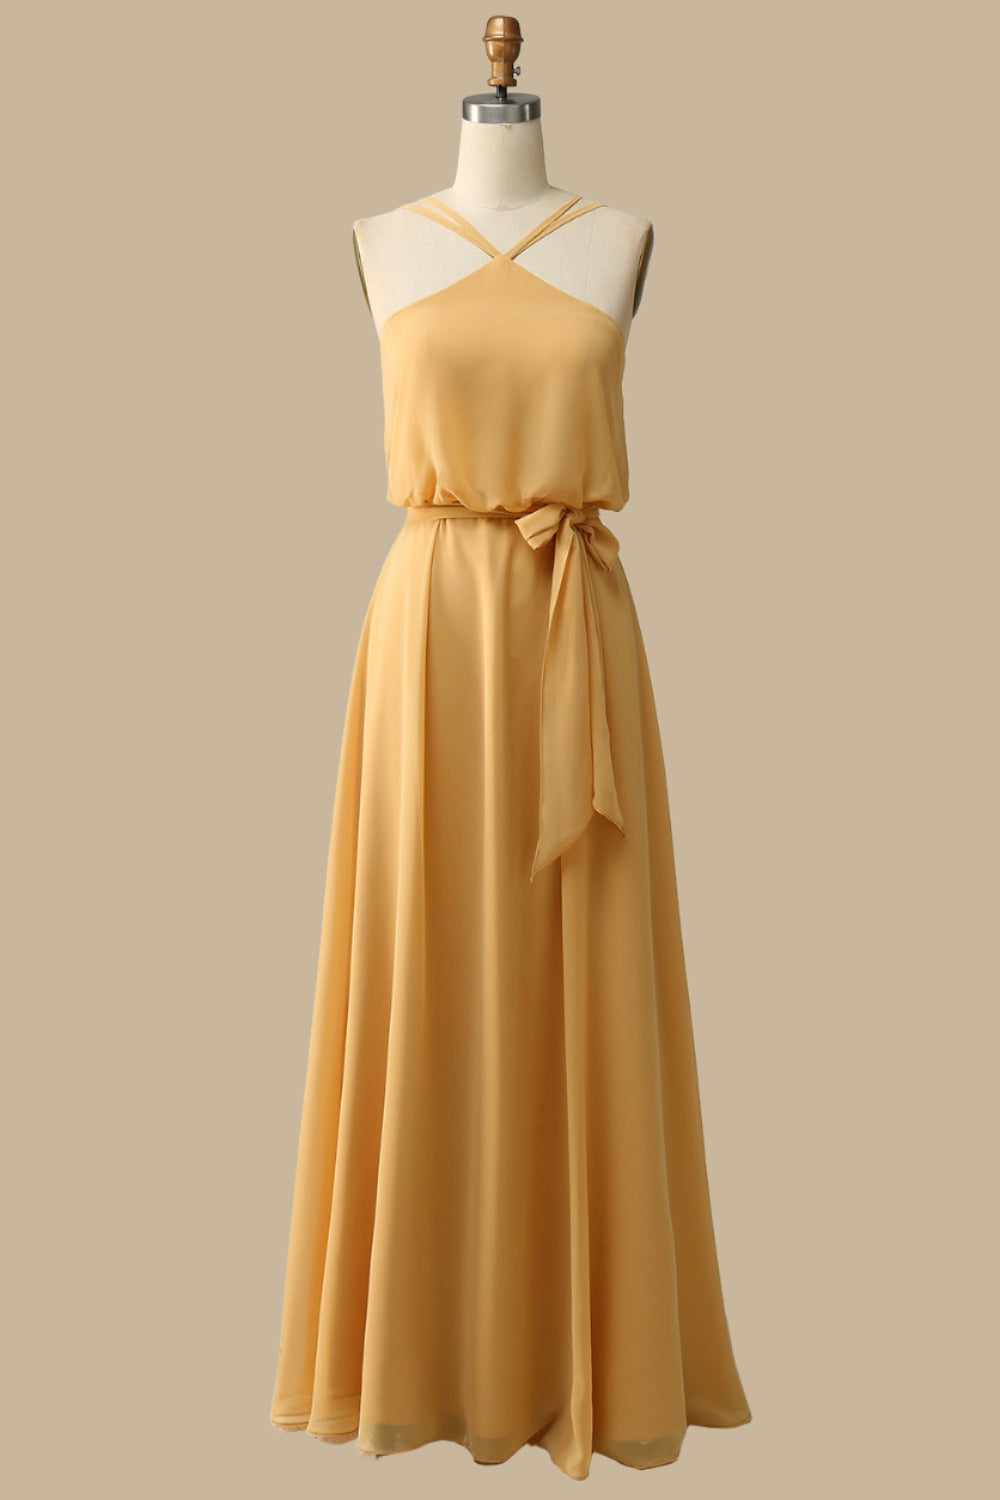 Blouson-Style Halter Chiffon Maxi Dress in Mustard Yellow